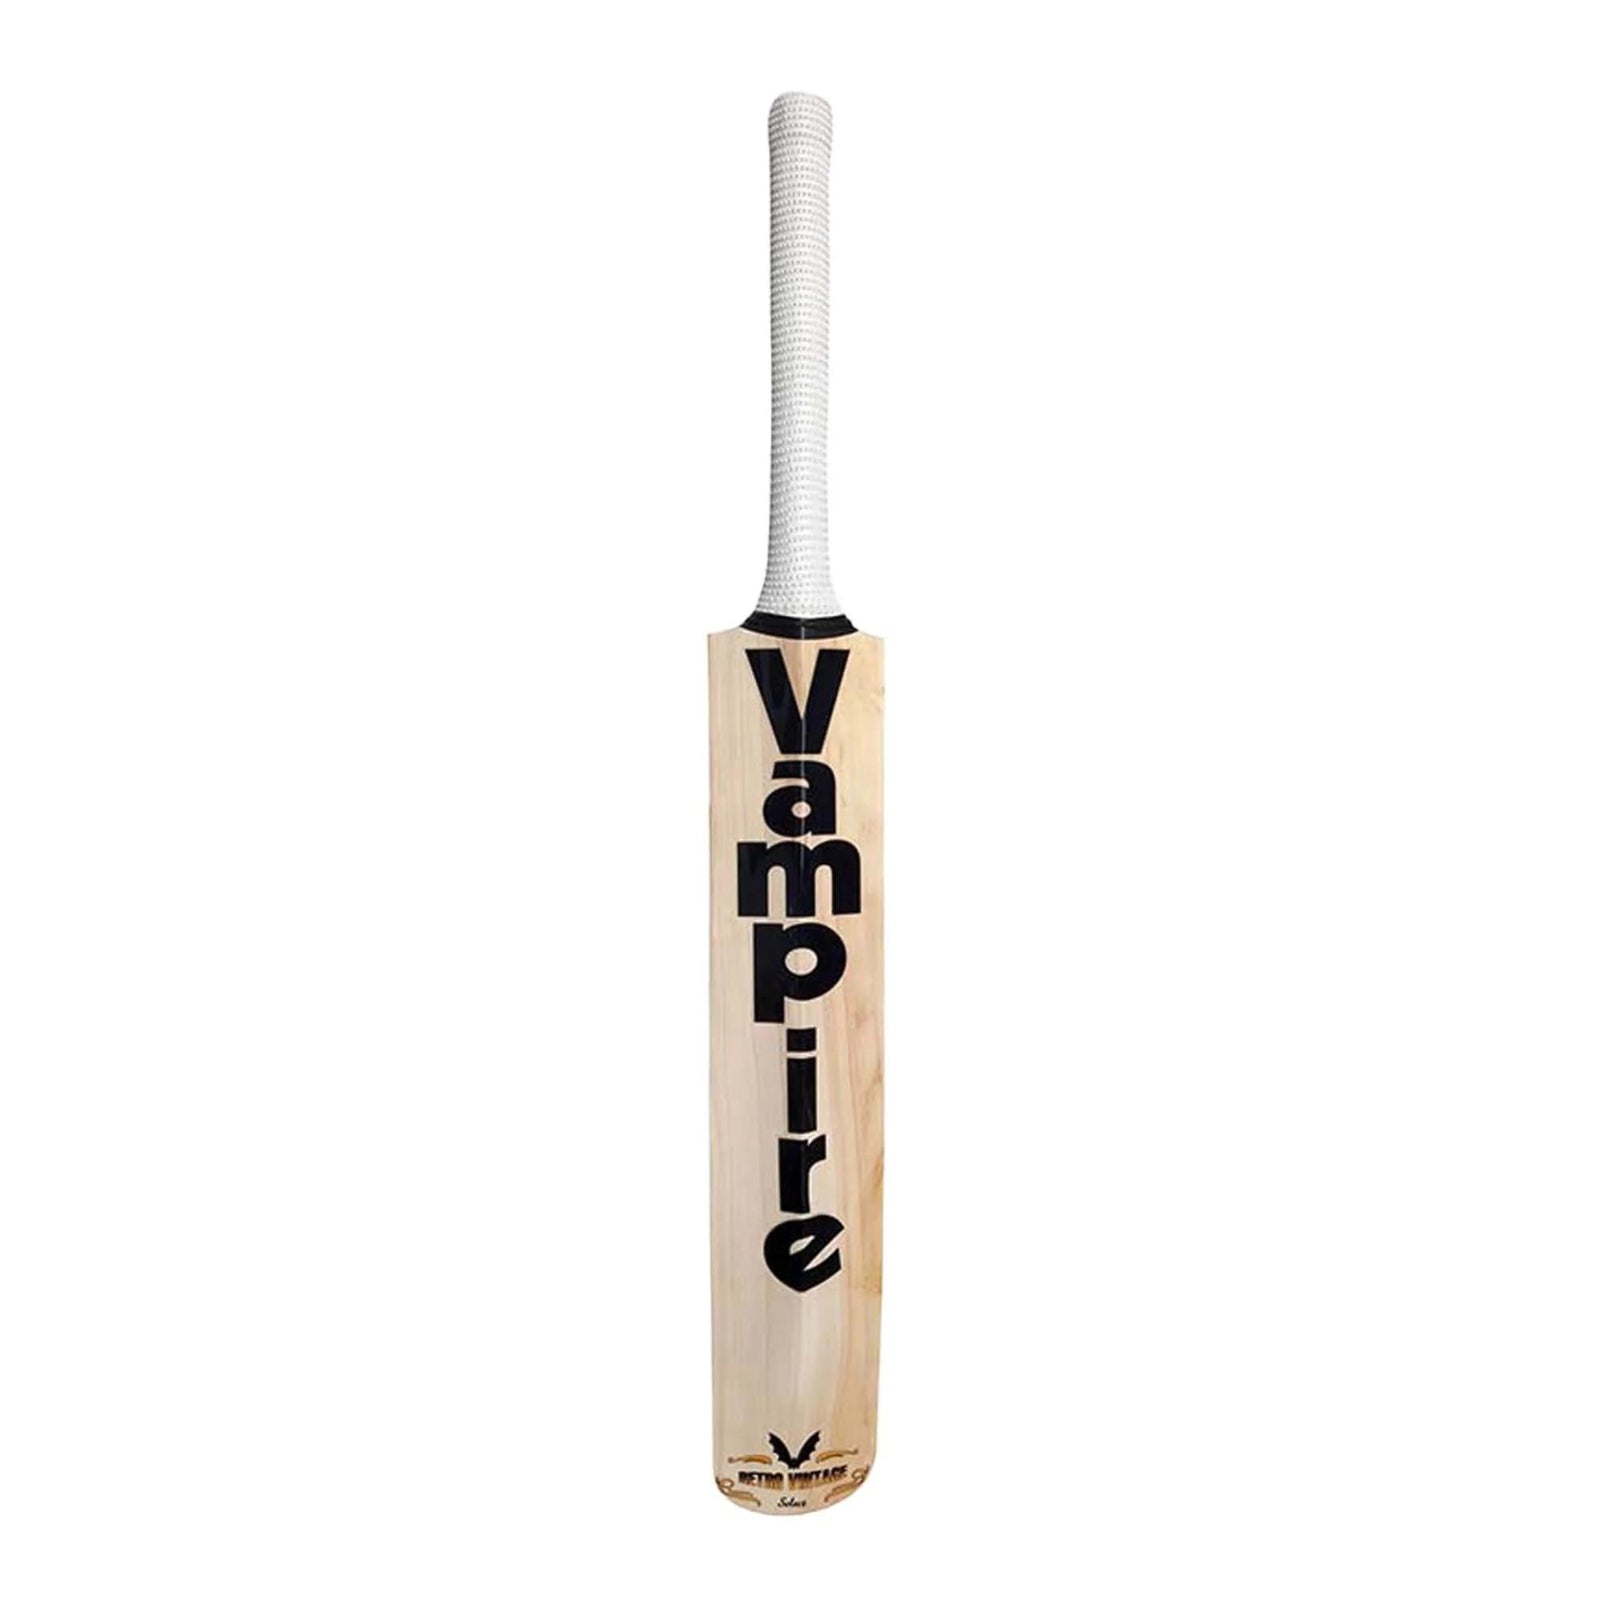 BAS Vintage Select Cricket Bat - Senior